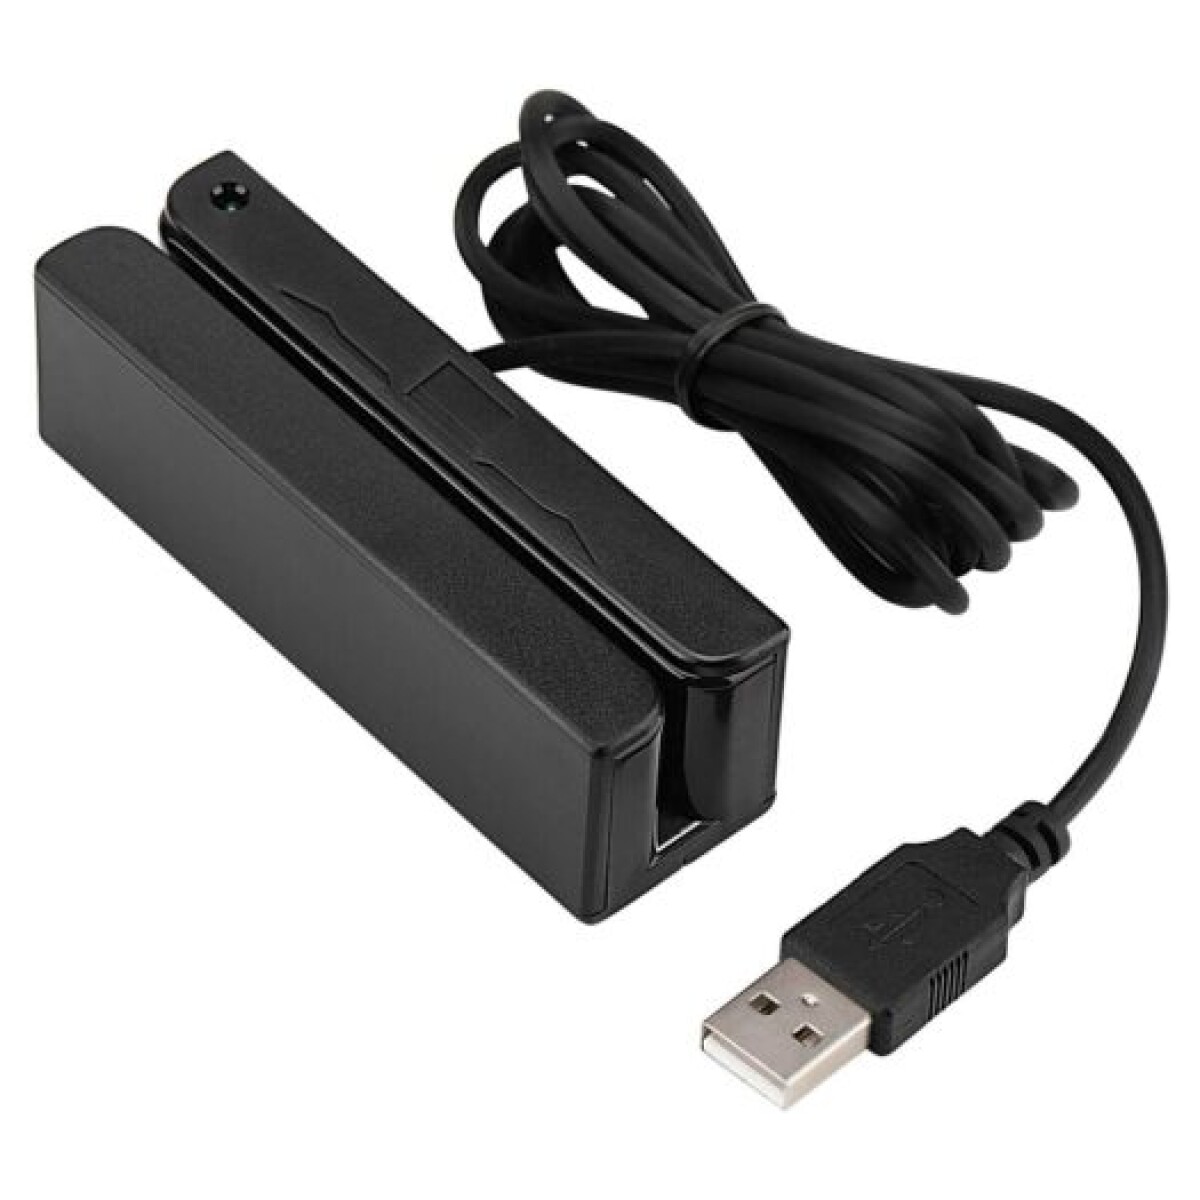 MagTek Mini MSR- USB Magneetkaartlezer